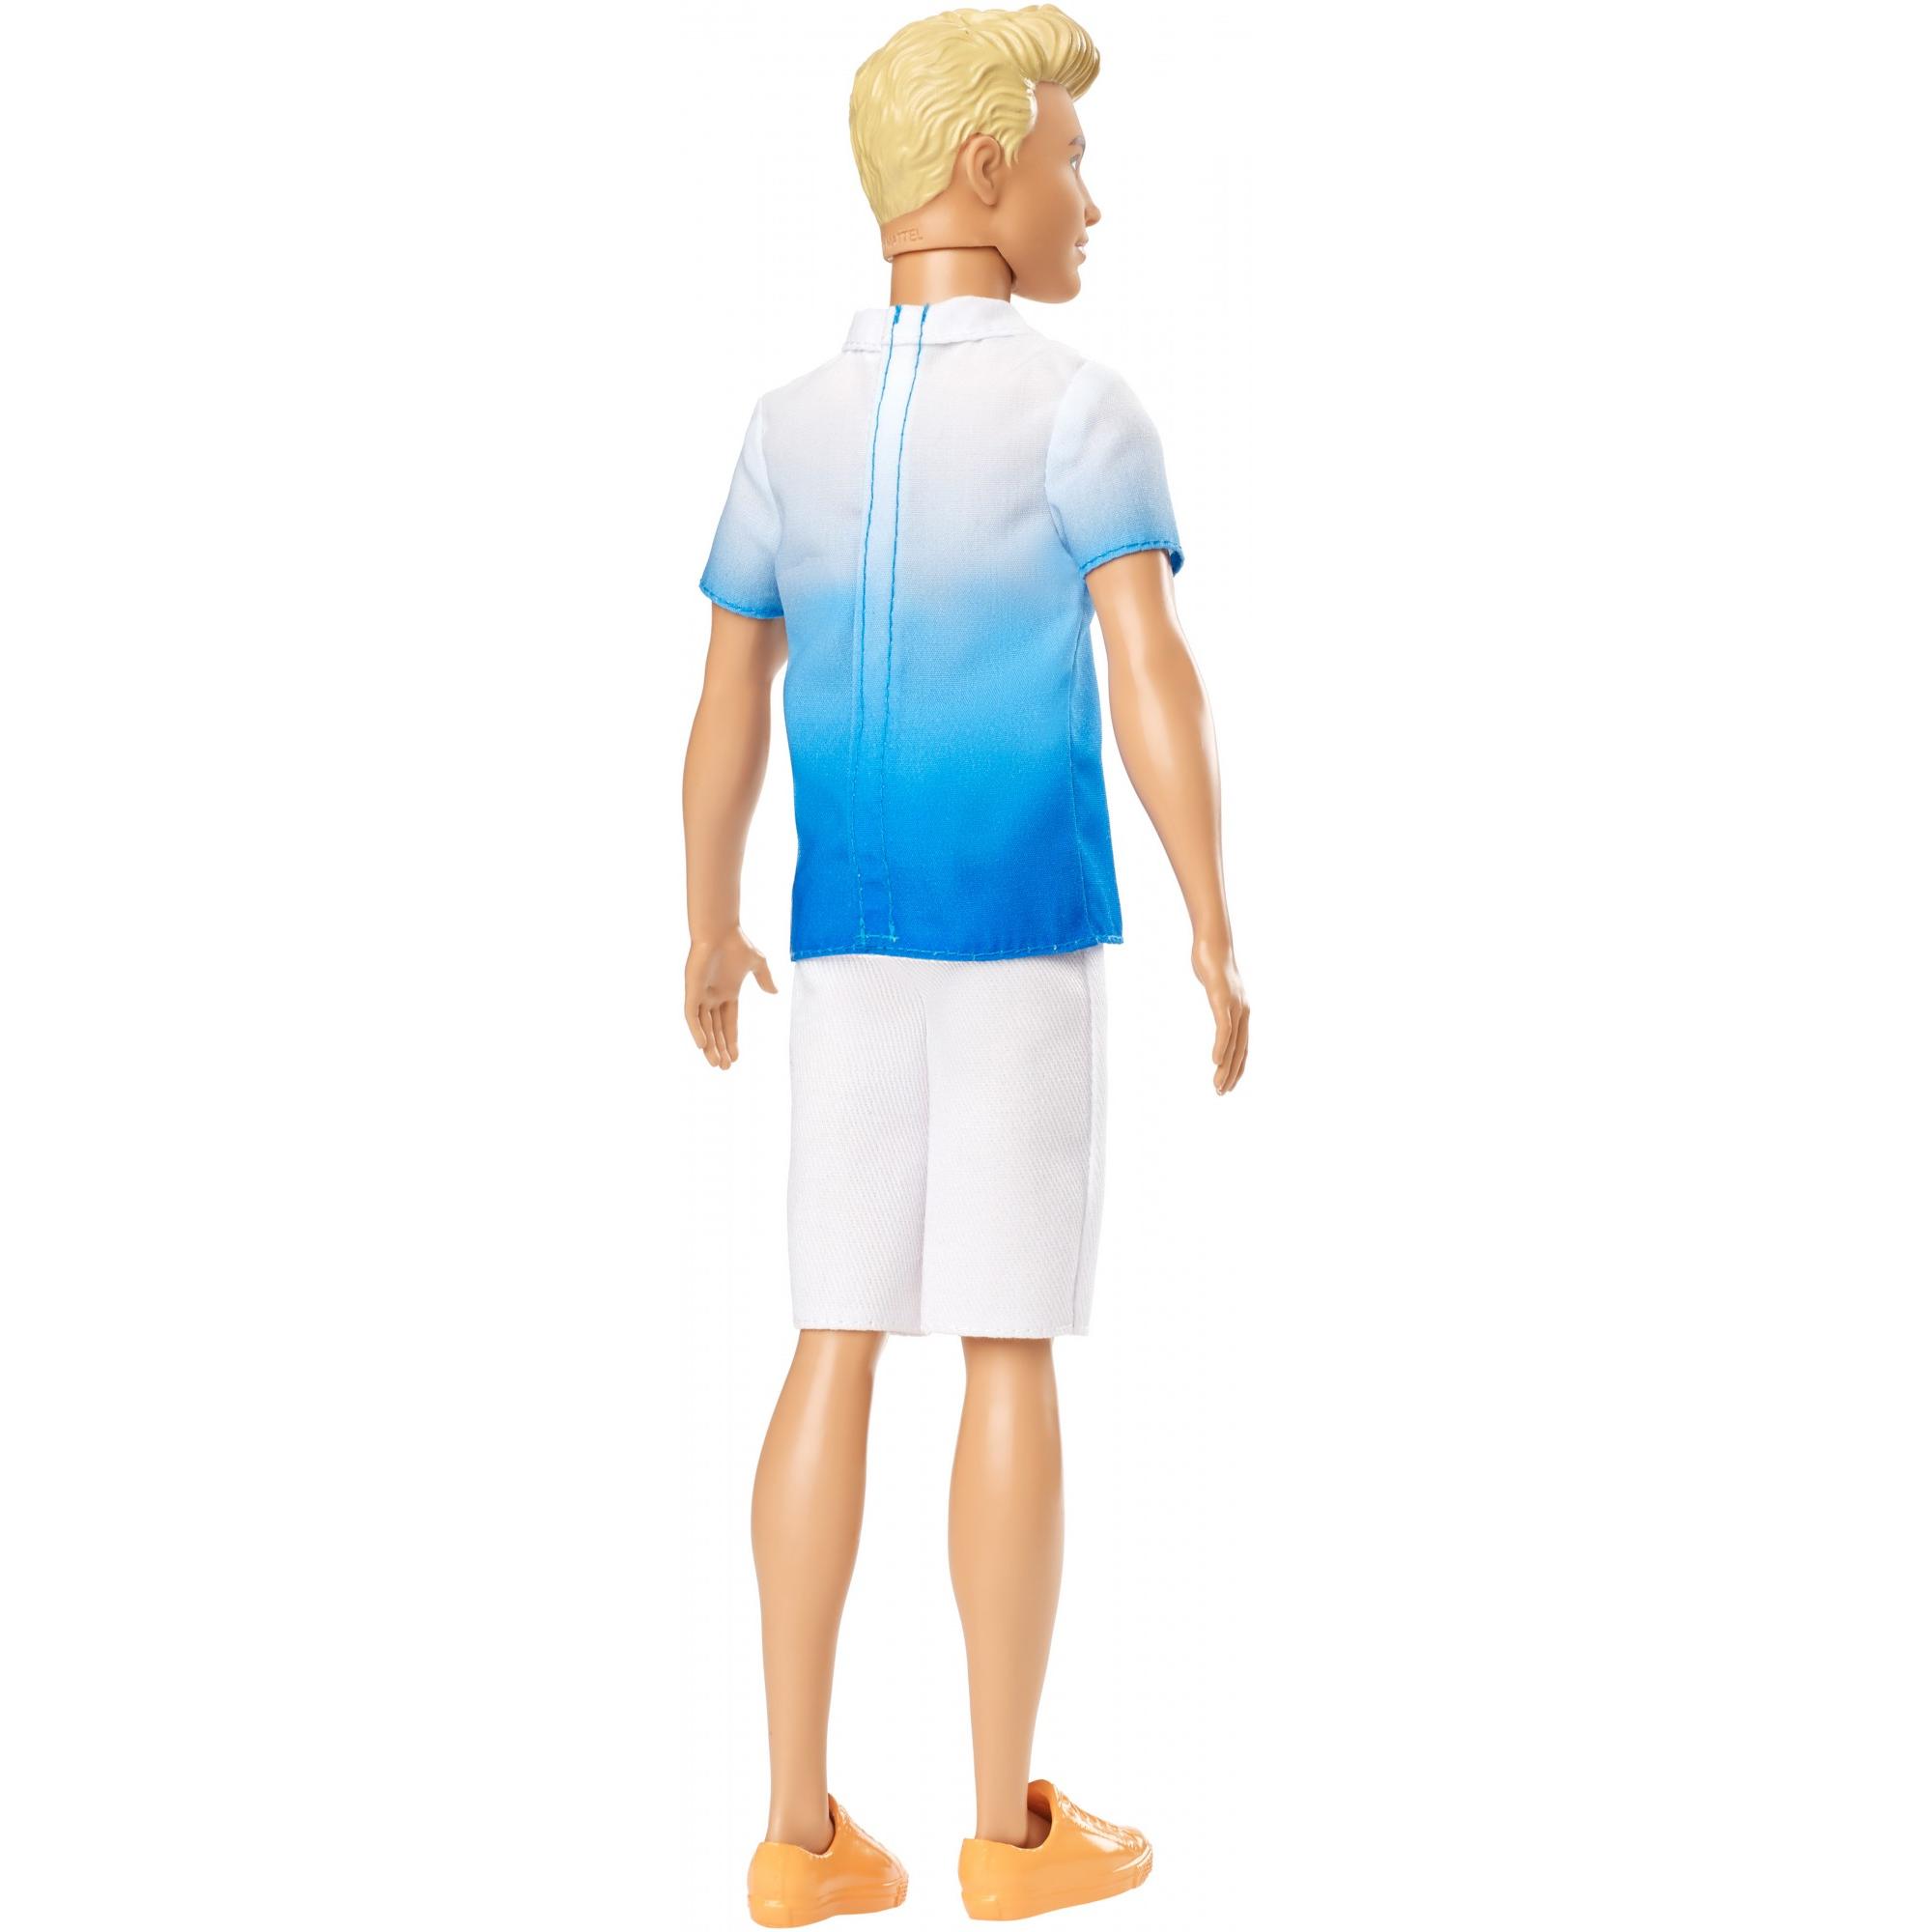 Barbie Ken Fashionistas Doll, Blonde Wearing Blue Ombre Shirt - image 5 of 6